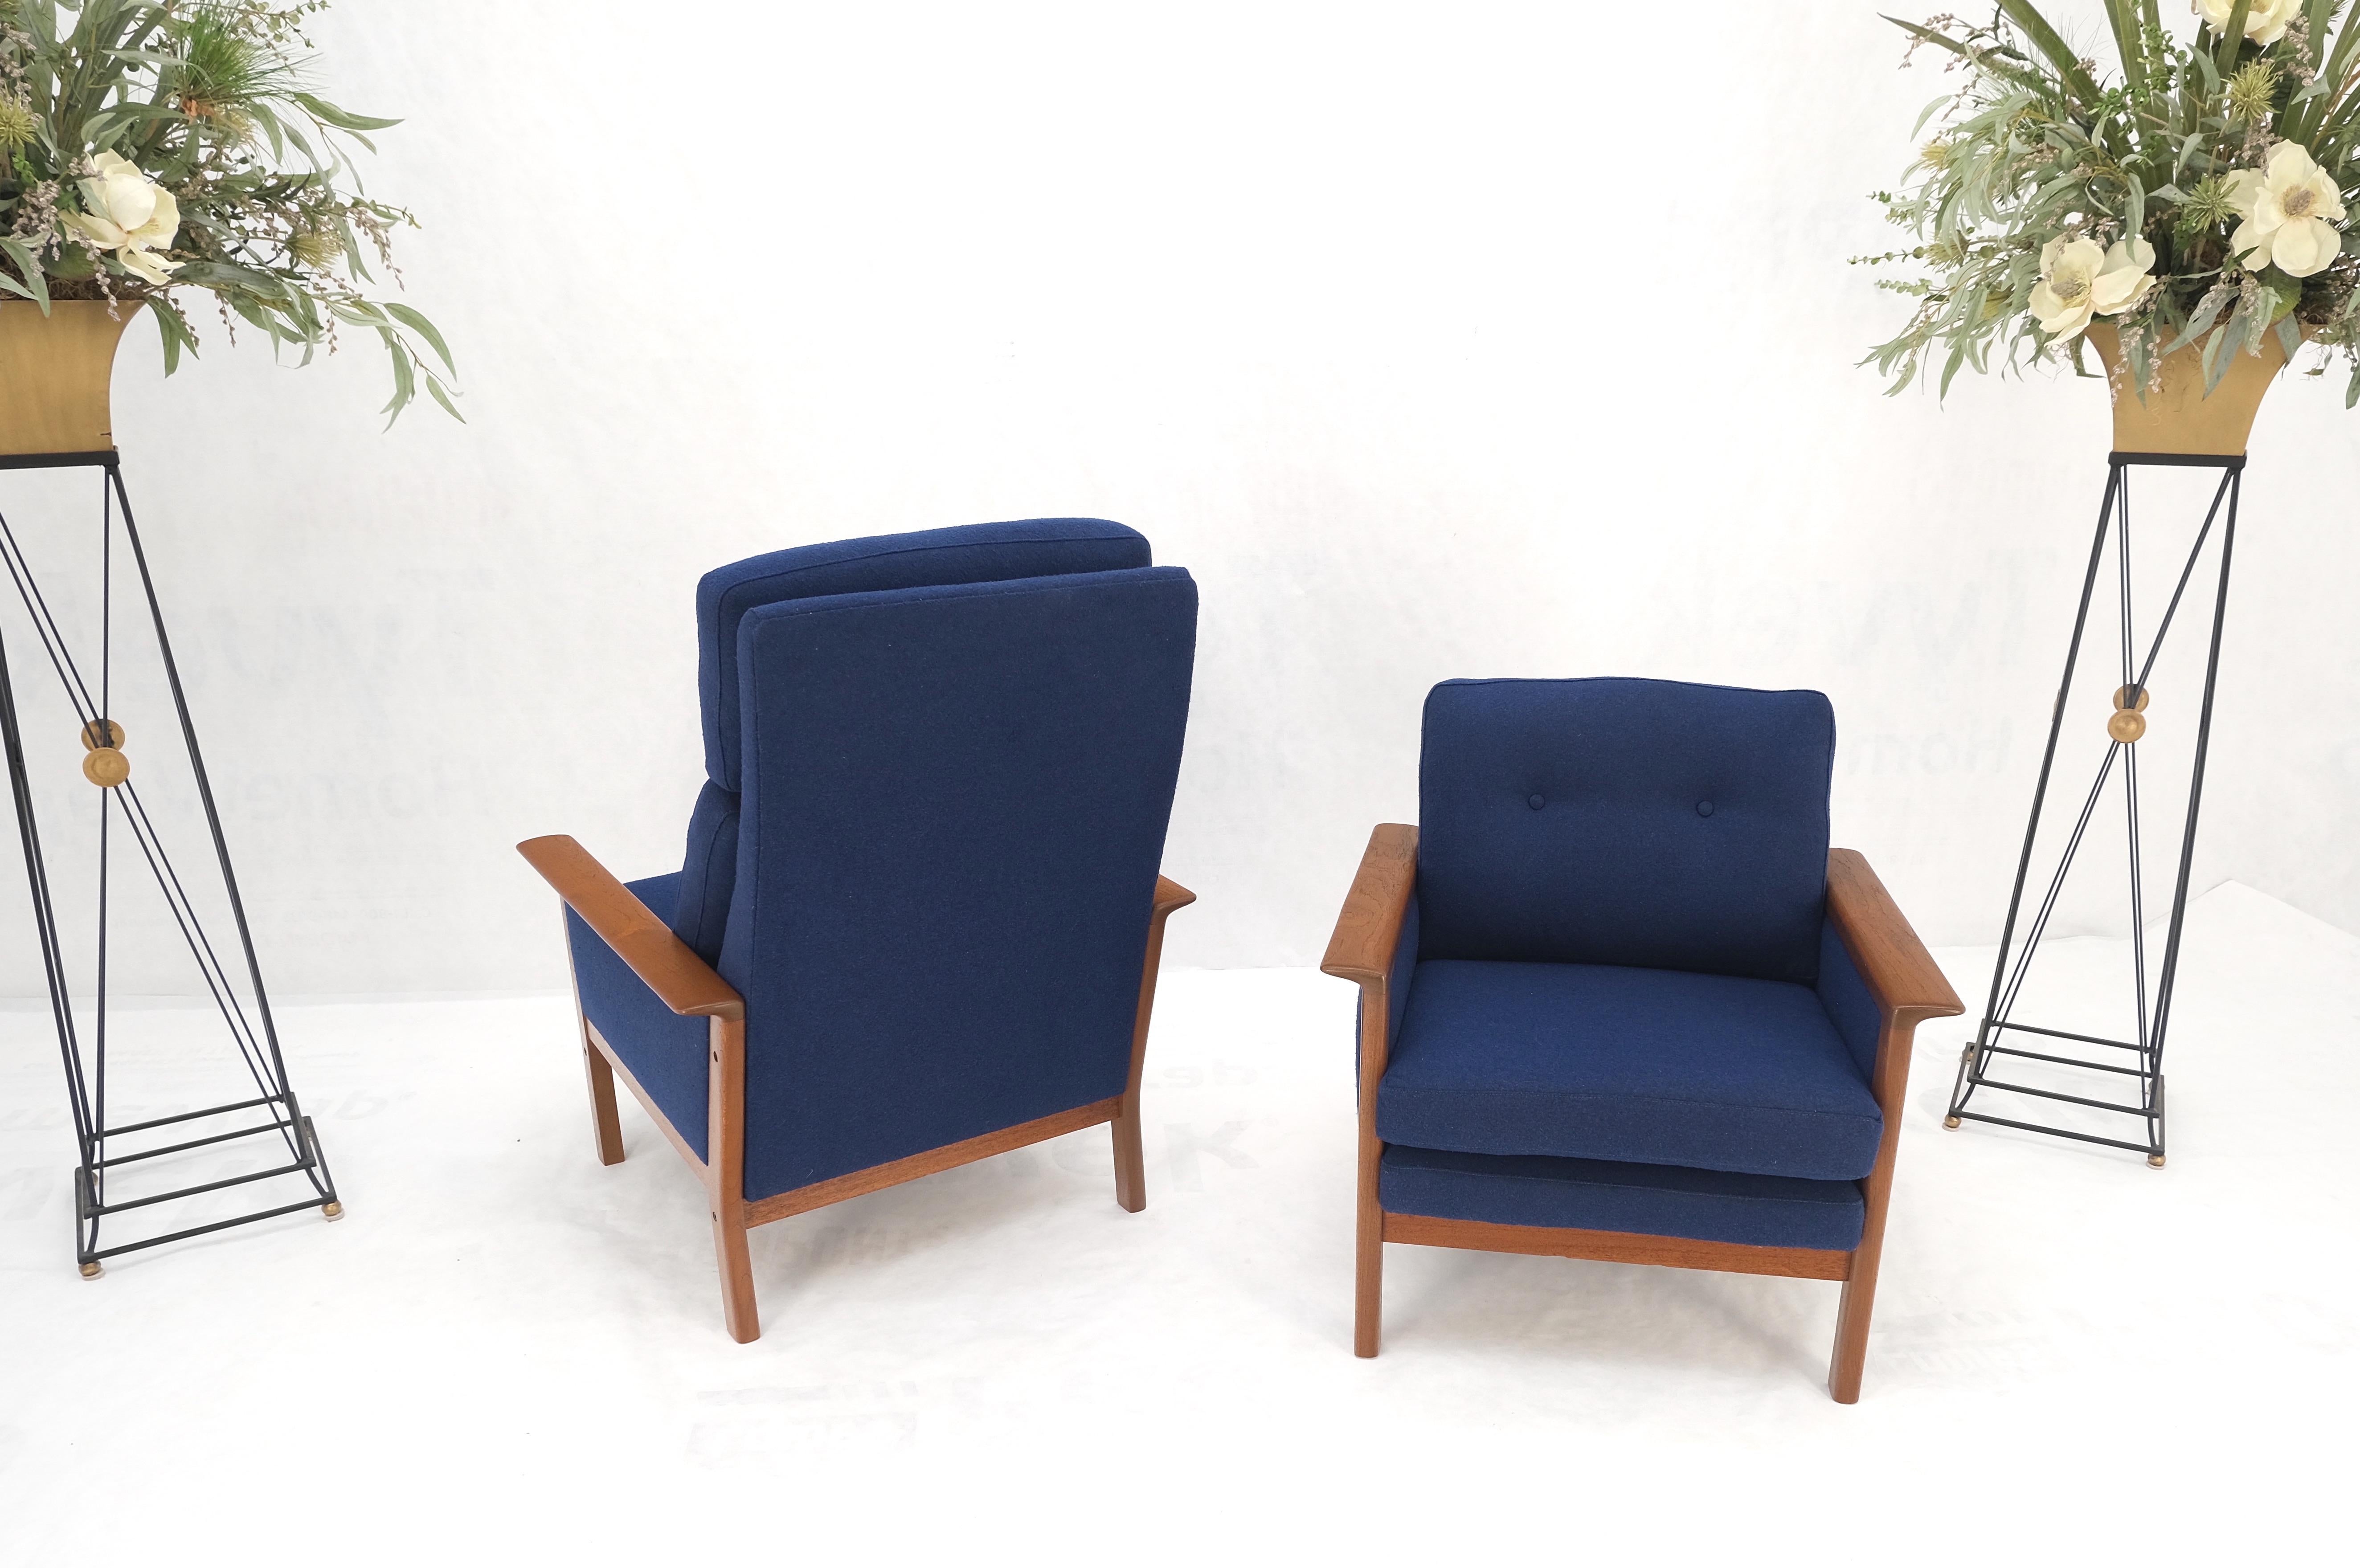 20th Century Danish Mid-Century Modern Teak Frames New Wool Upholstery Lounge Chairs Refinish For Sale